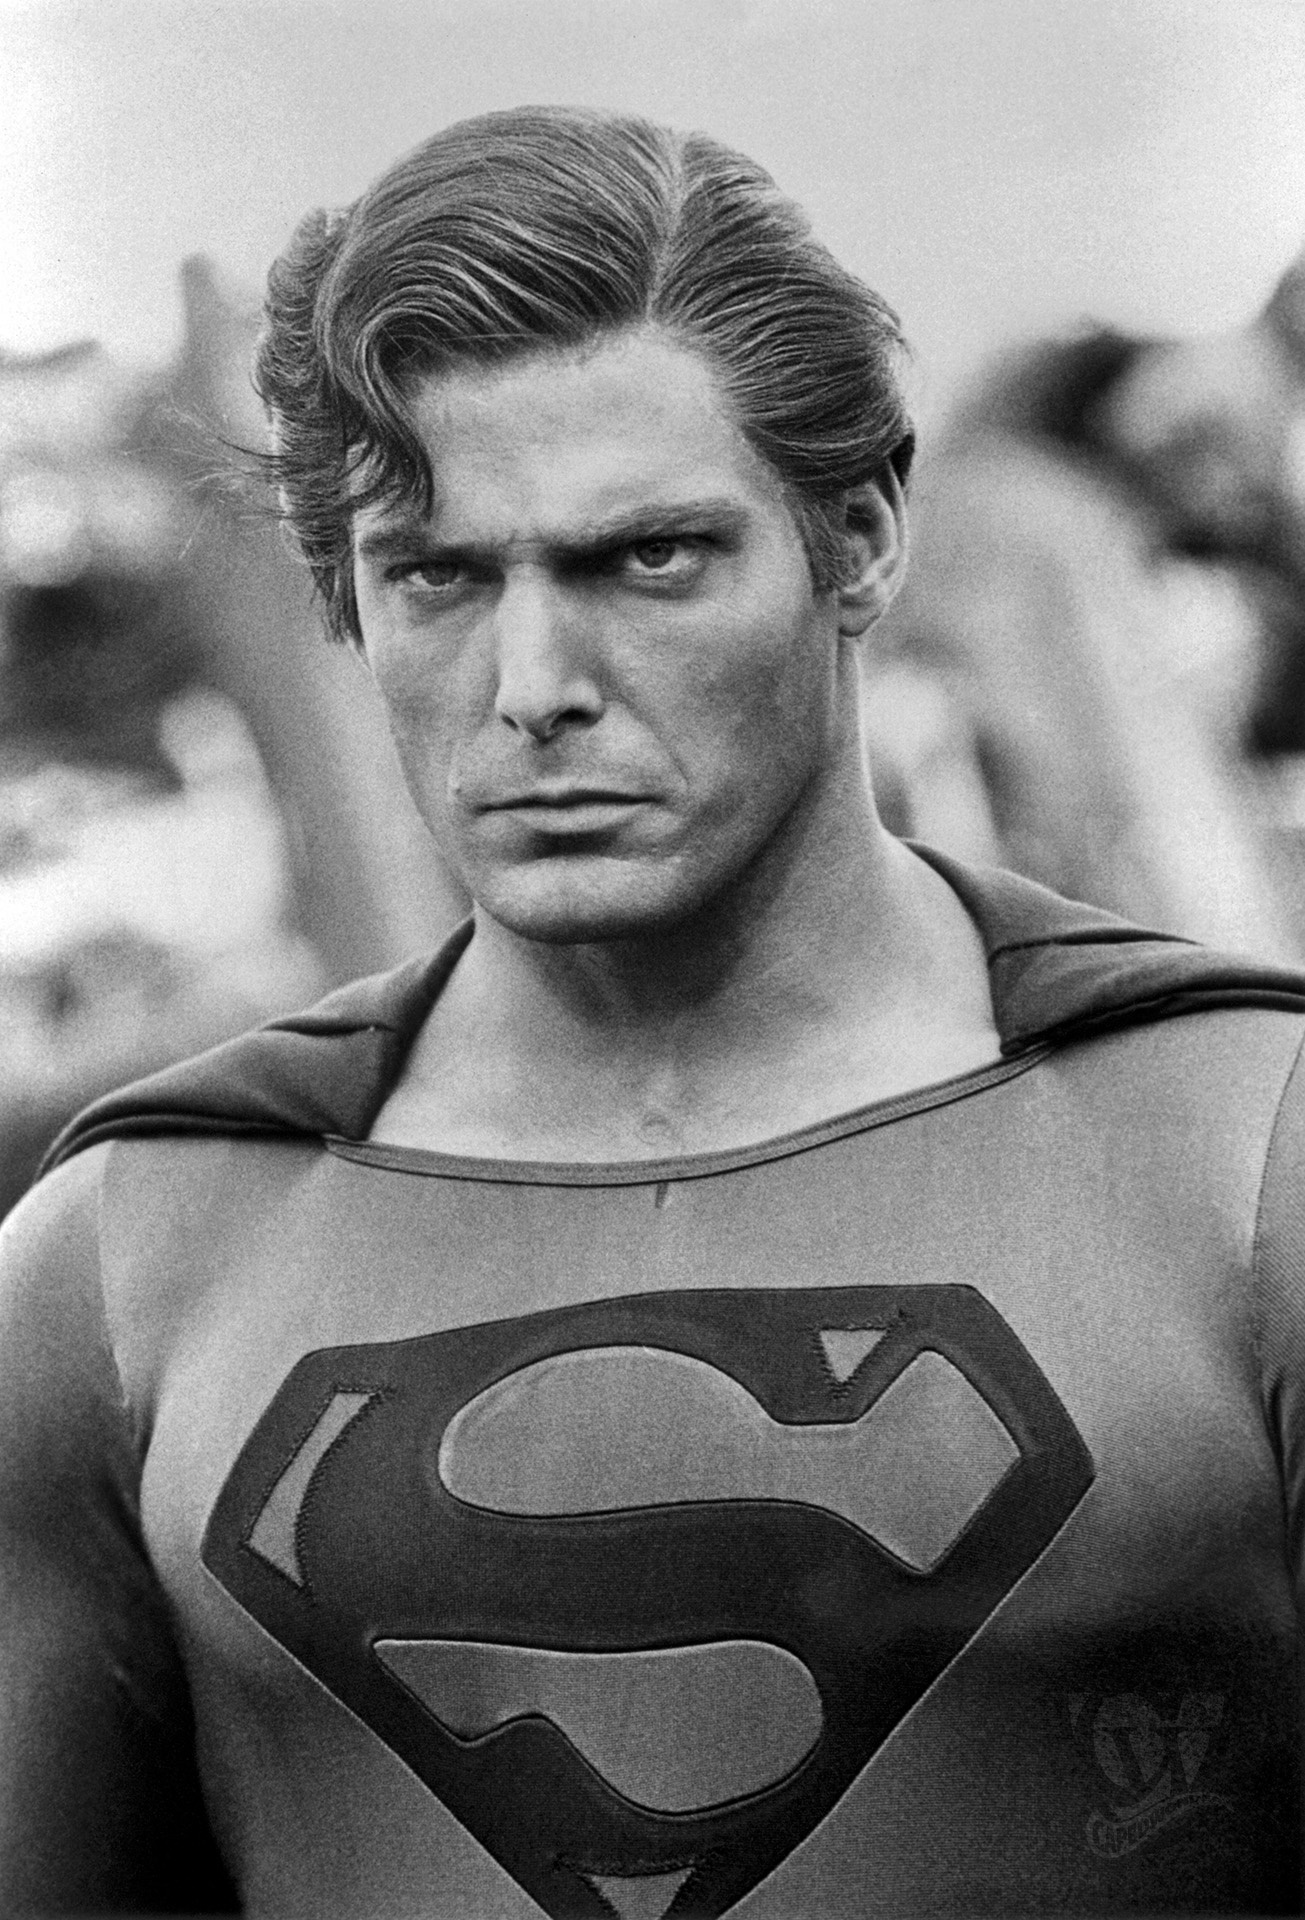 CW-SIII-Reeve-evil-Superman-intense-portrait